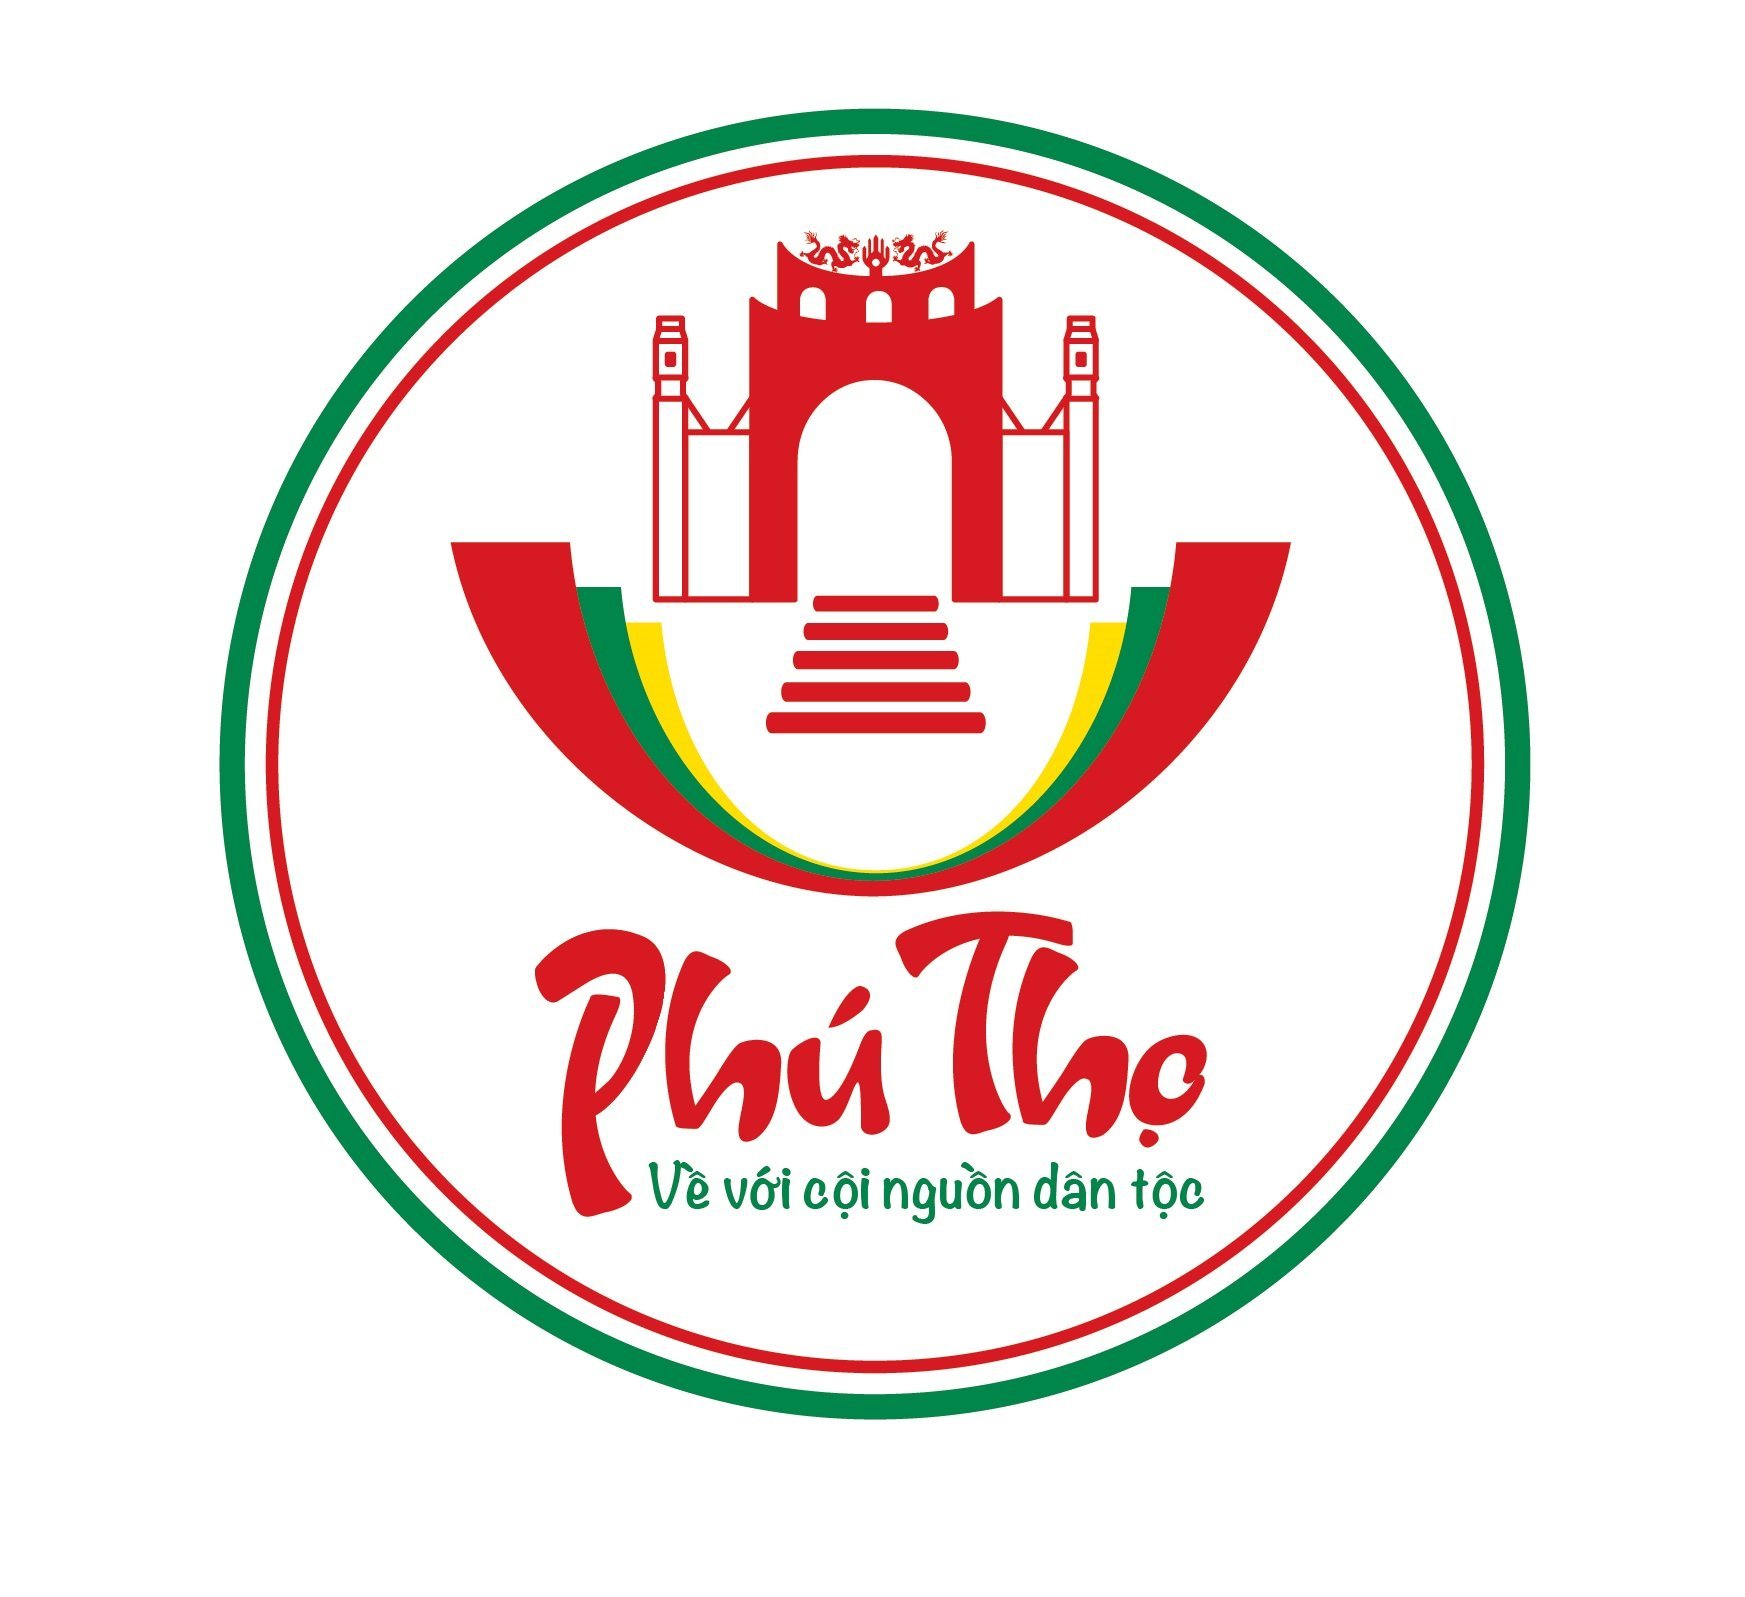 Phu Tho Tourism Promotion Information Center